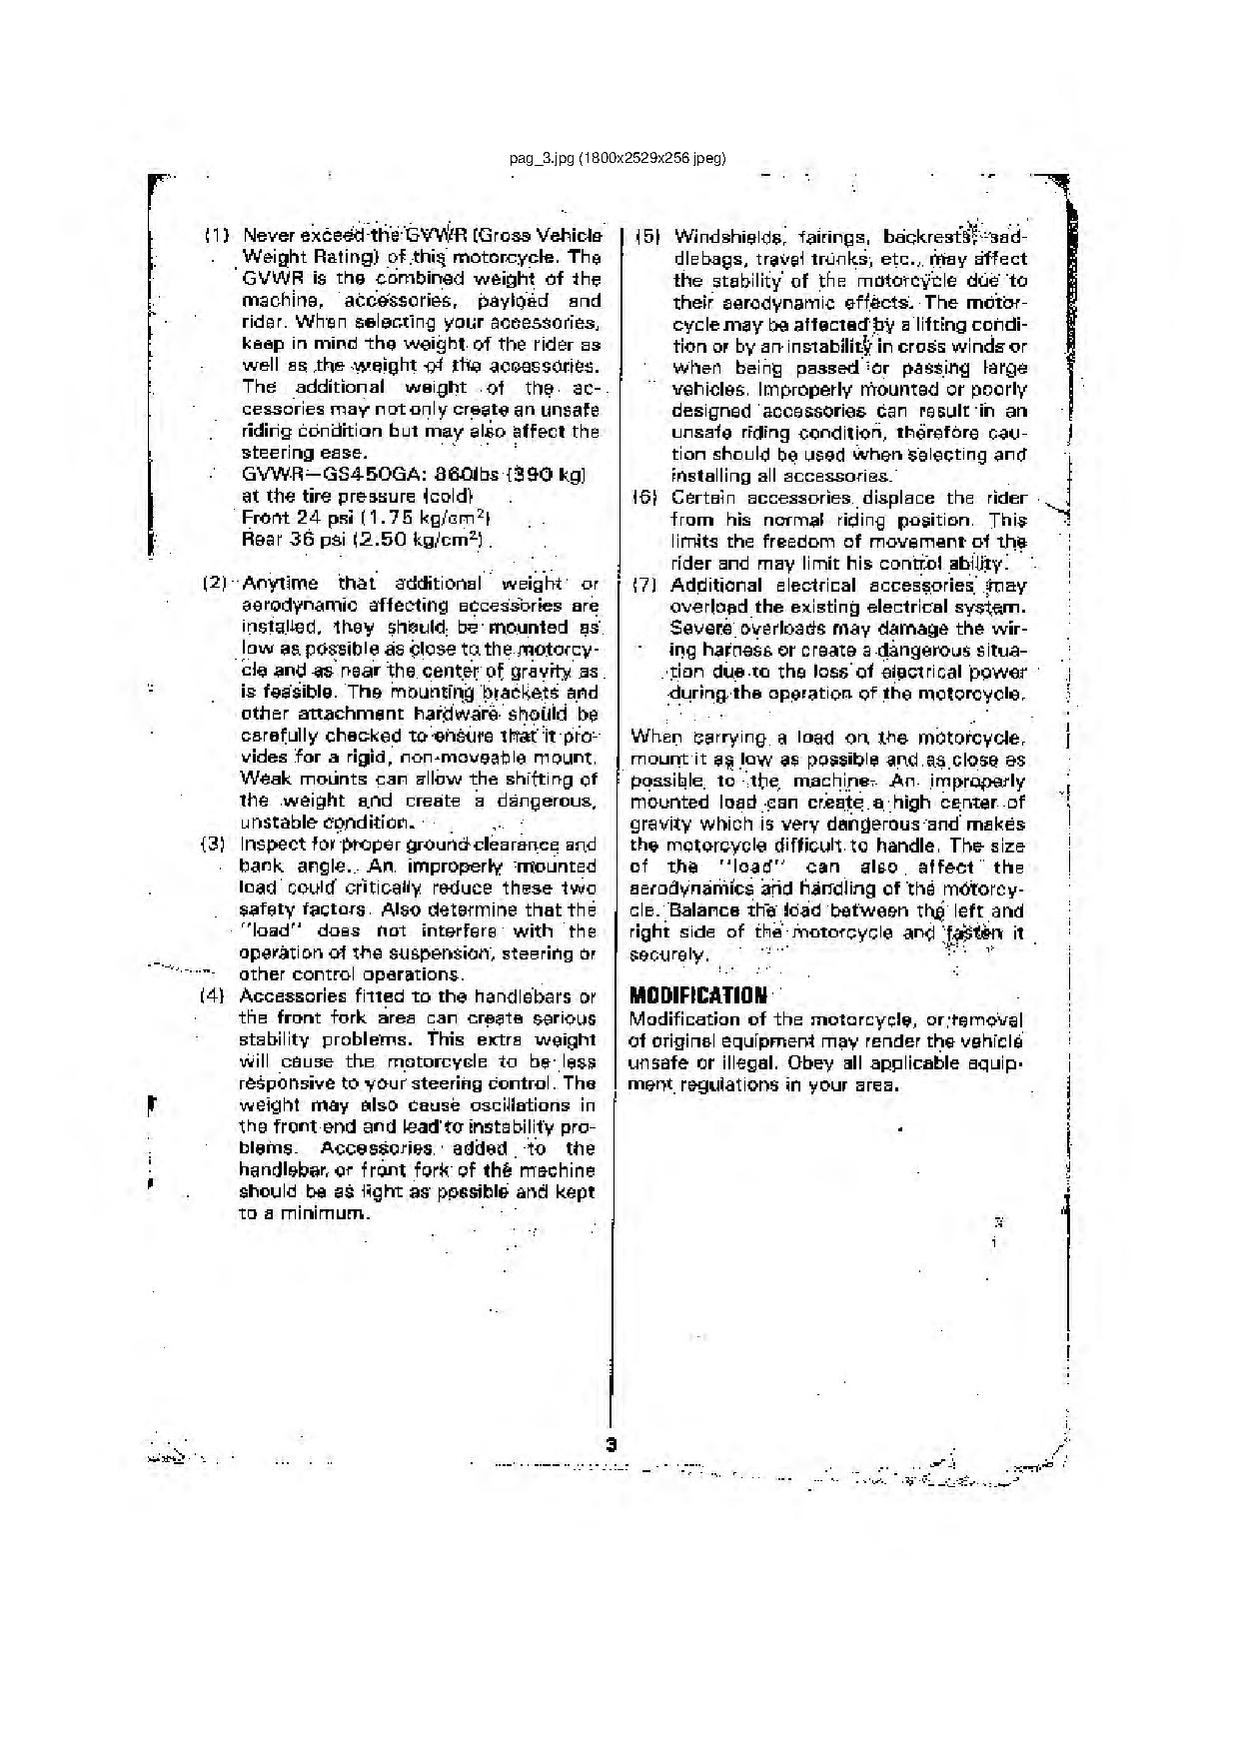 File:Suzuki GS450GA 1983 Owners Manual.pdf